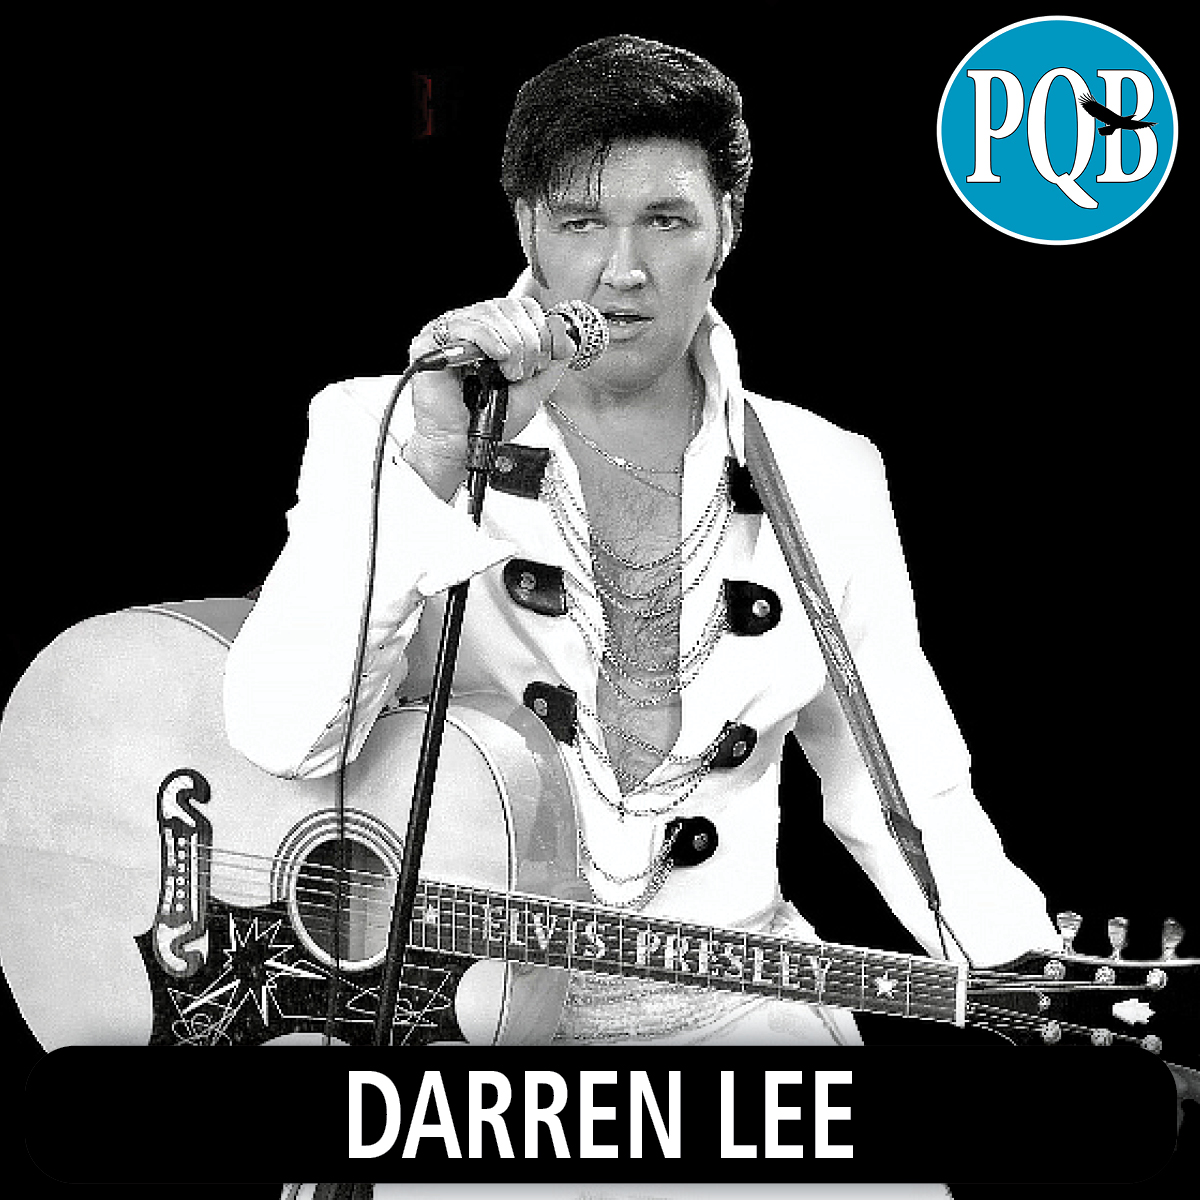 Darren Lee was named the ‘Ultimate Elvis Tribute Artist’